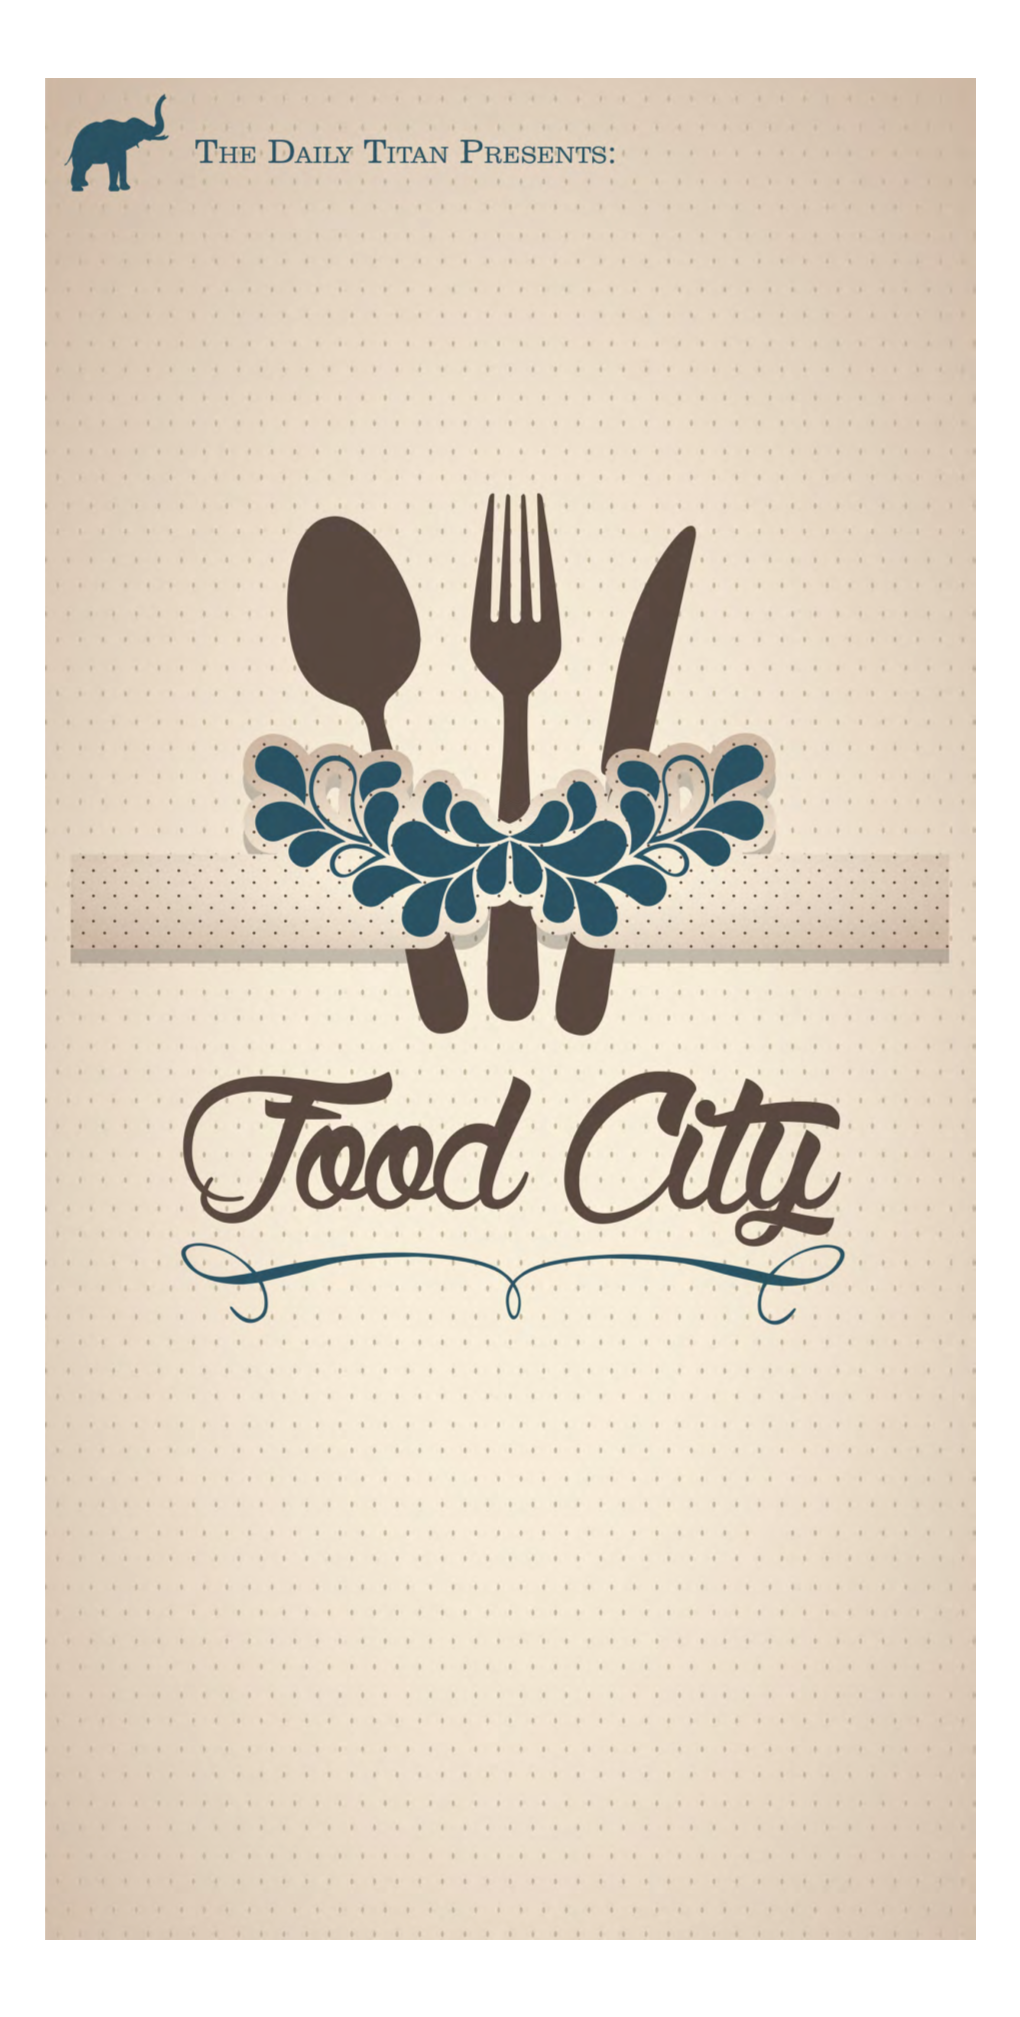 2014-03-20-Food City.Pdf